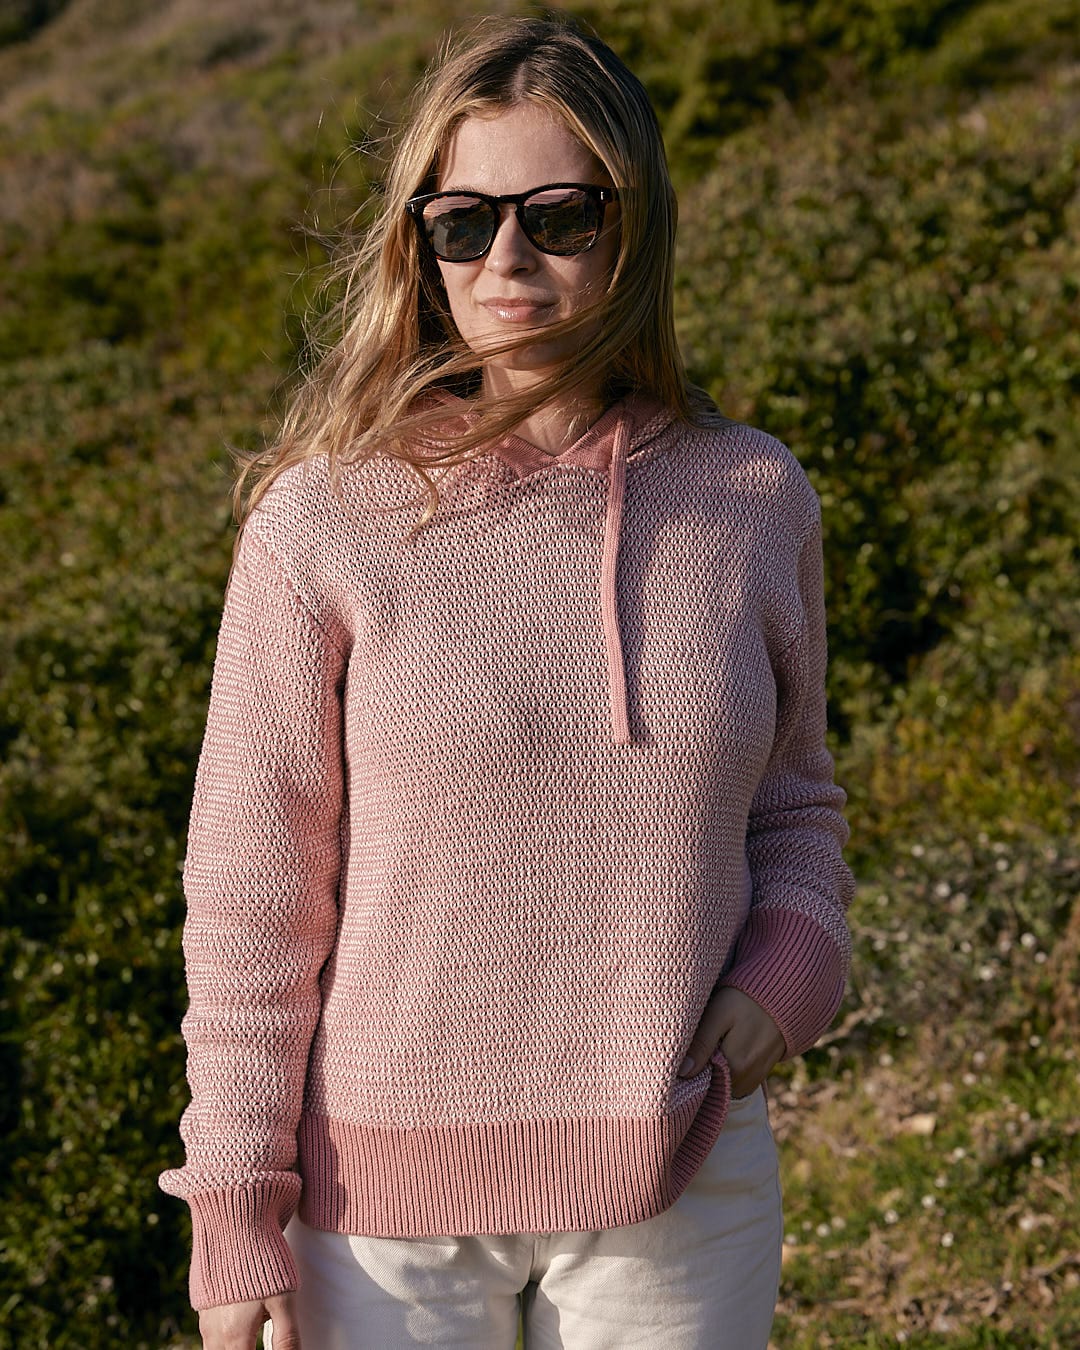 A woman in a Saltrock Poppy - Womens Knitted Pop Hoodie - Mid Pink standing in a field.